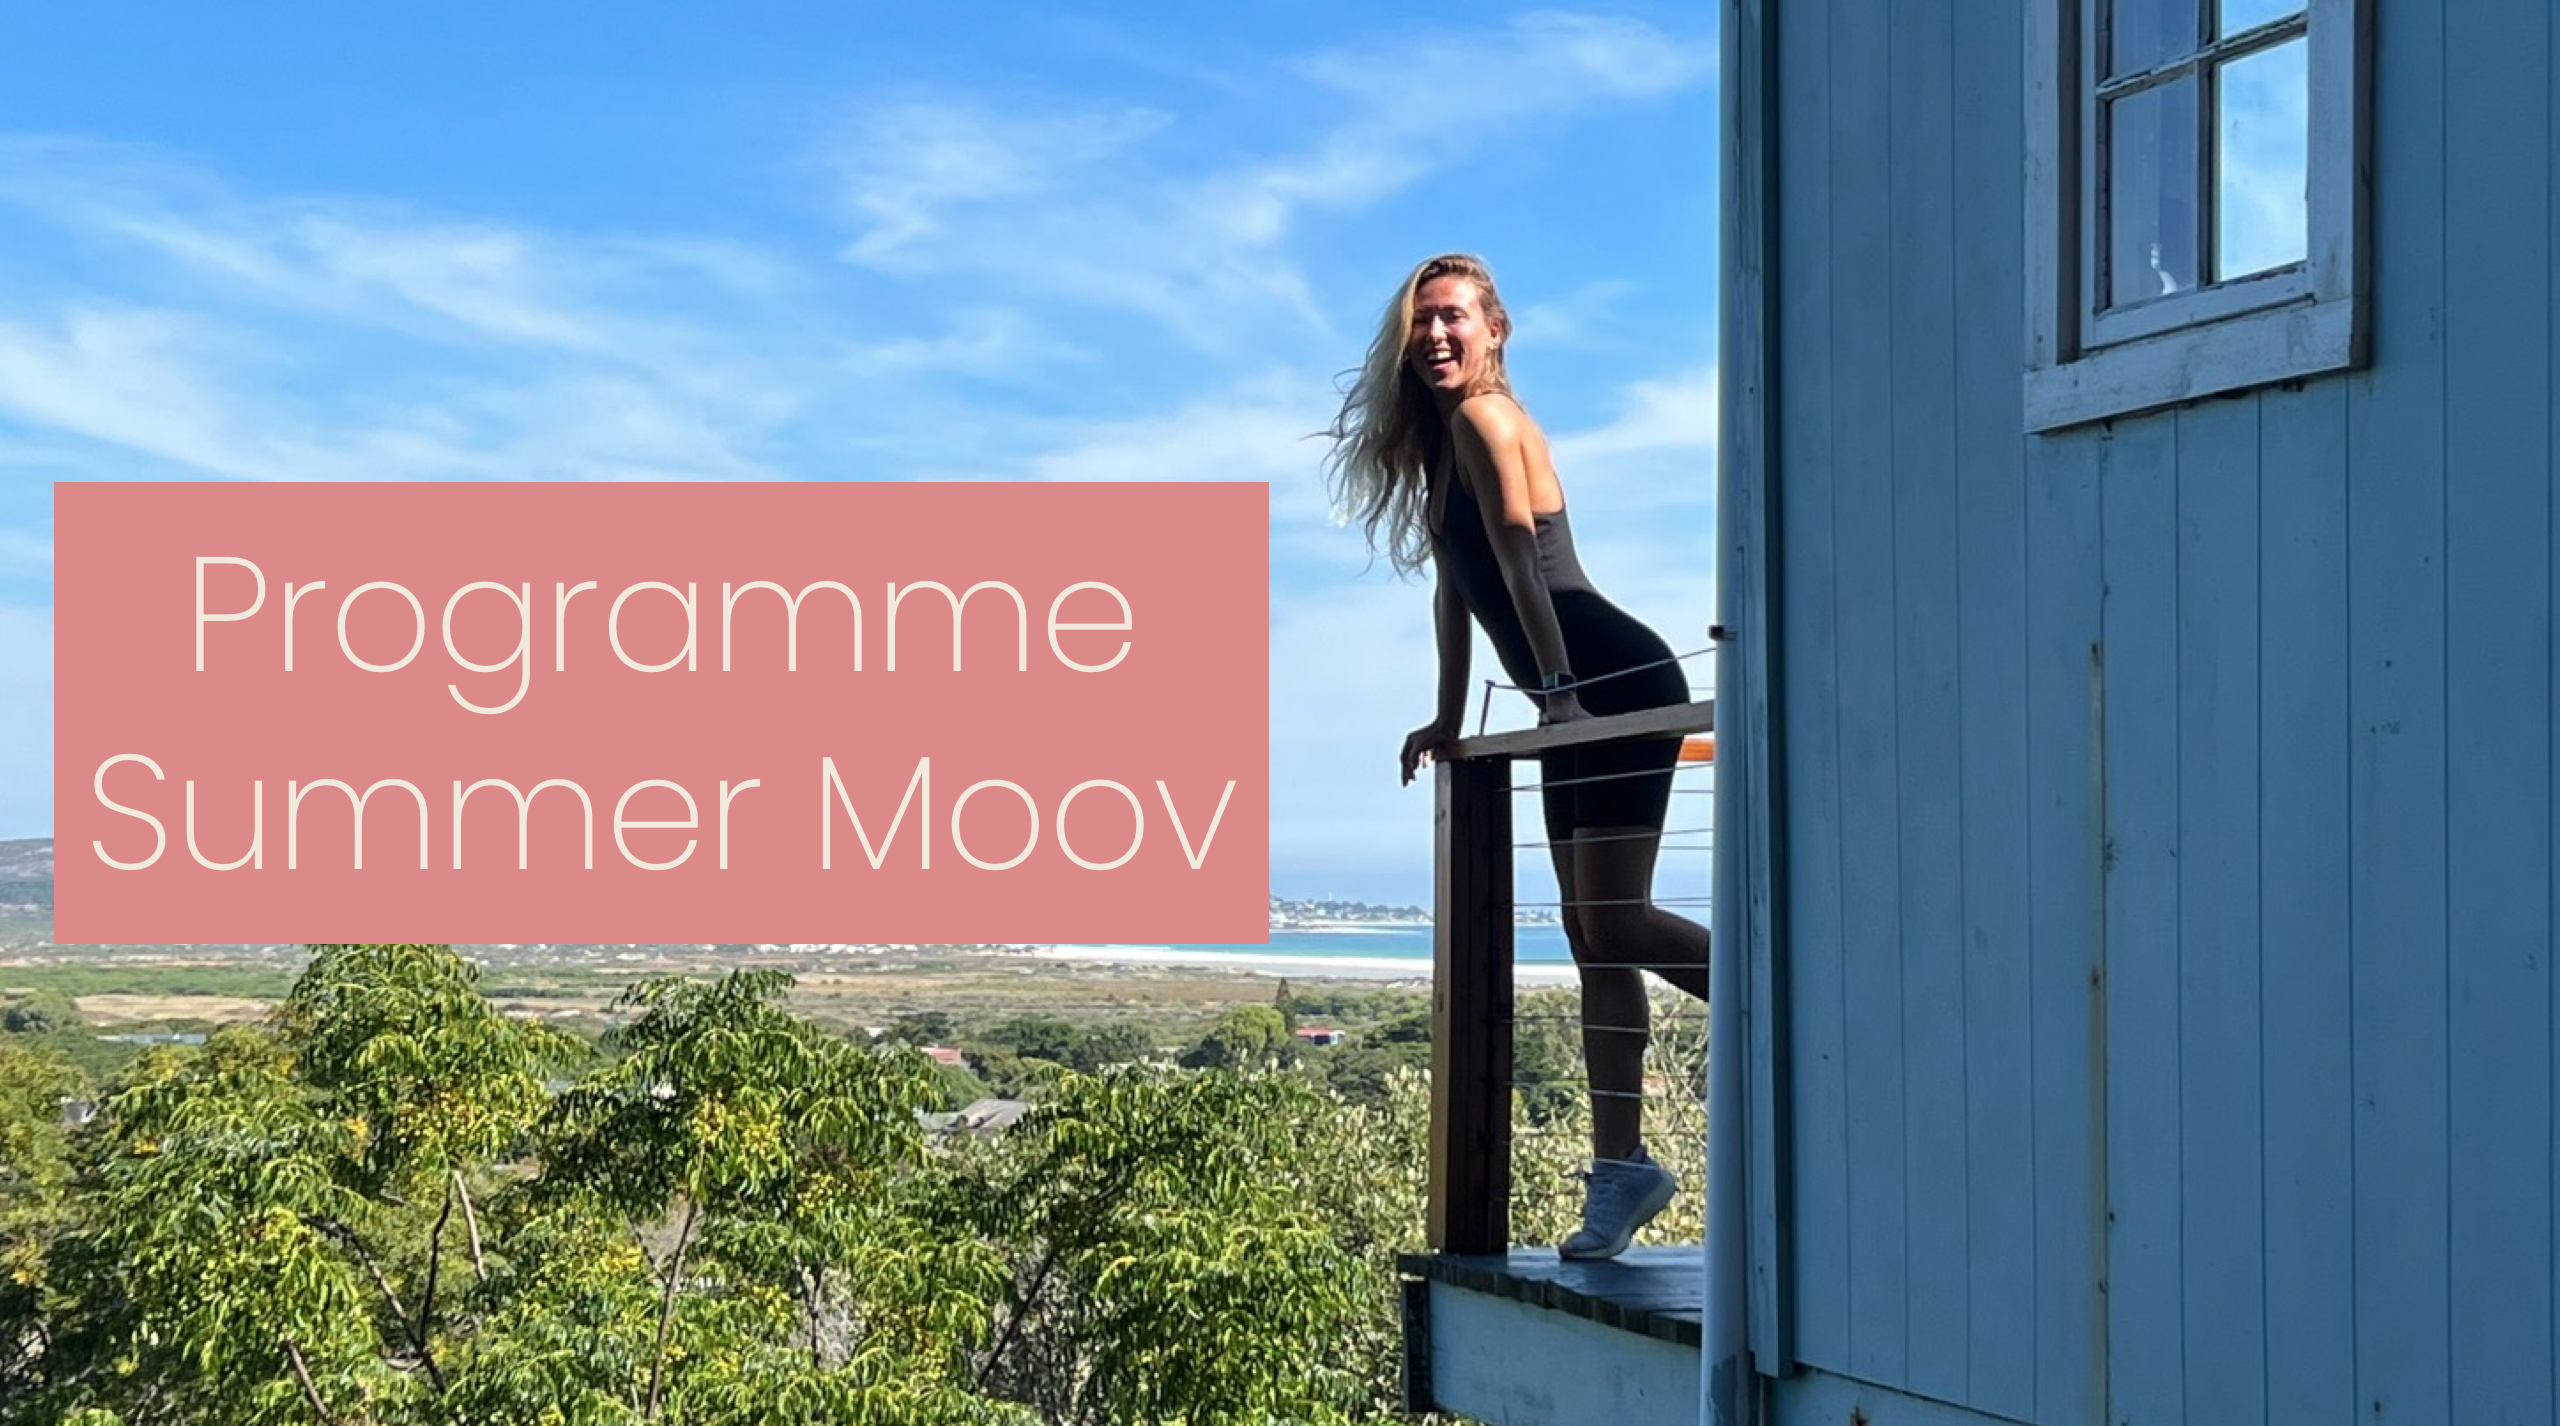 Programme Summer Moov